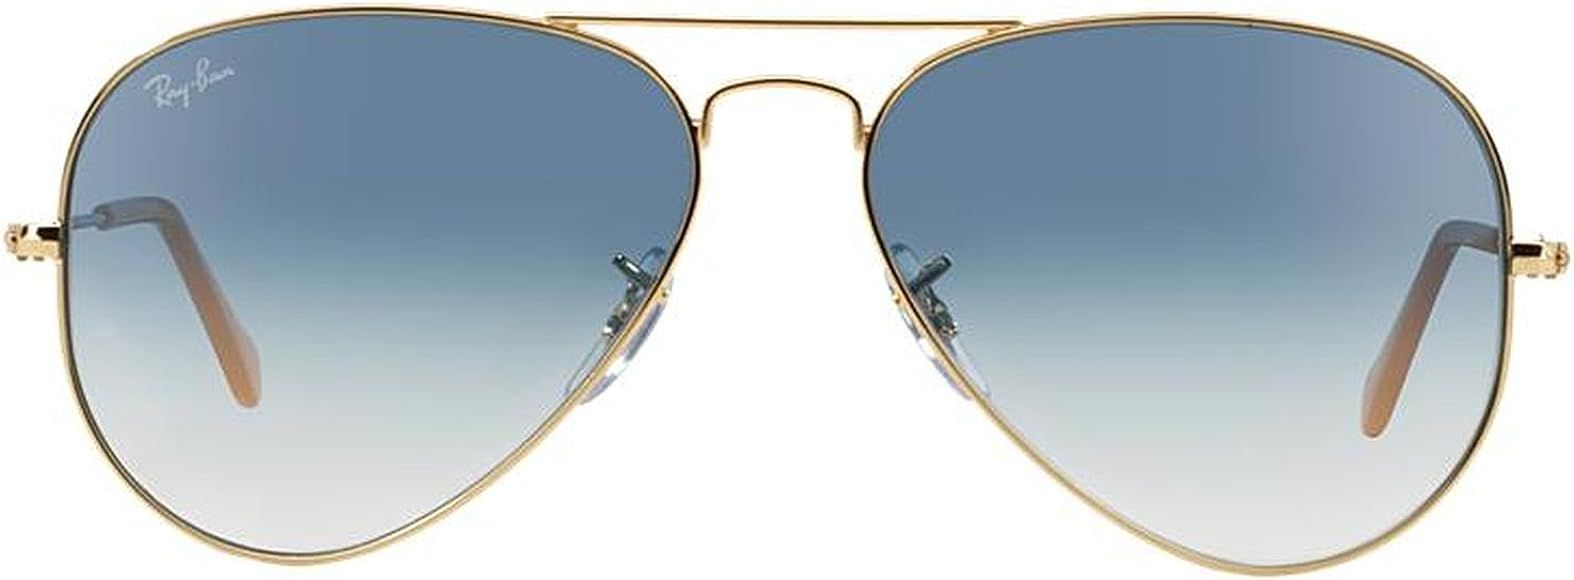 Ray-Ban RB3025 Aviator Sunglasses Arista Gold w/Blue Gradient (001/3F) 3025 58mm Authentic, 58 mm | Amazon (US)